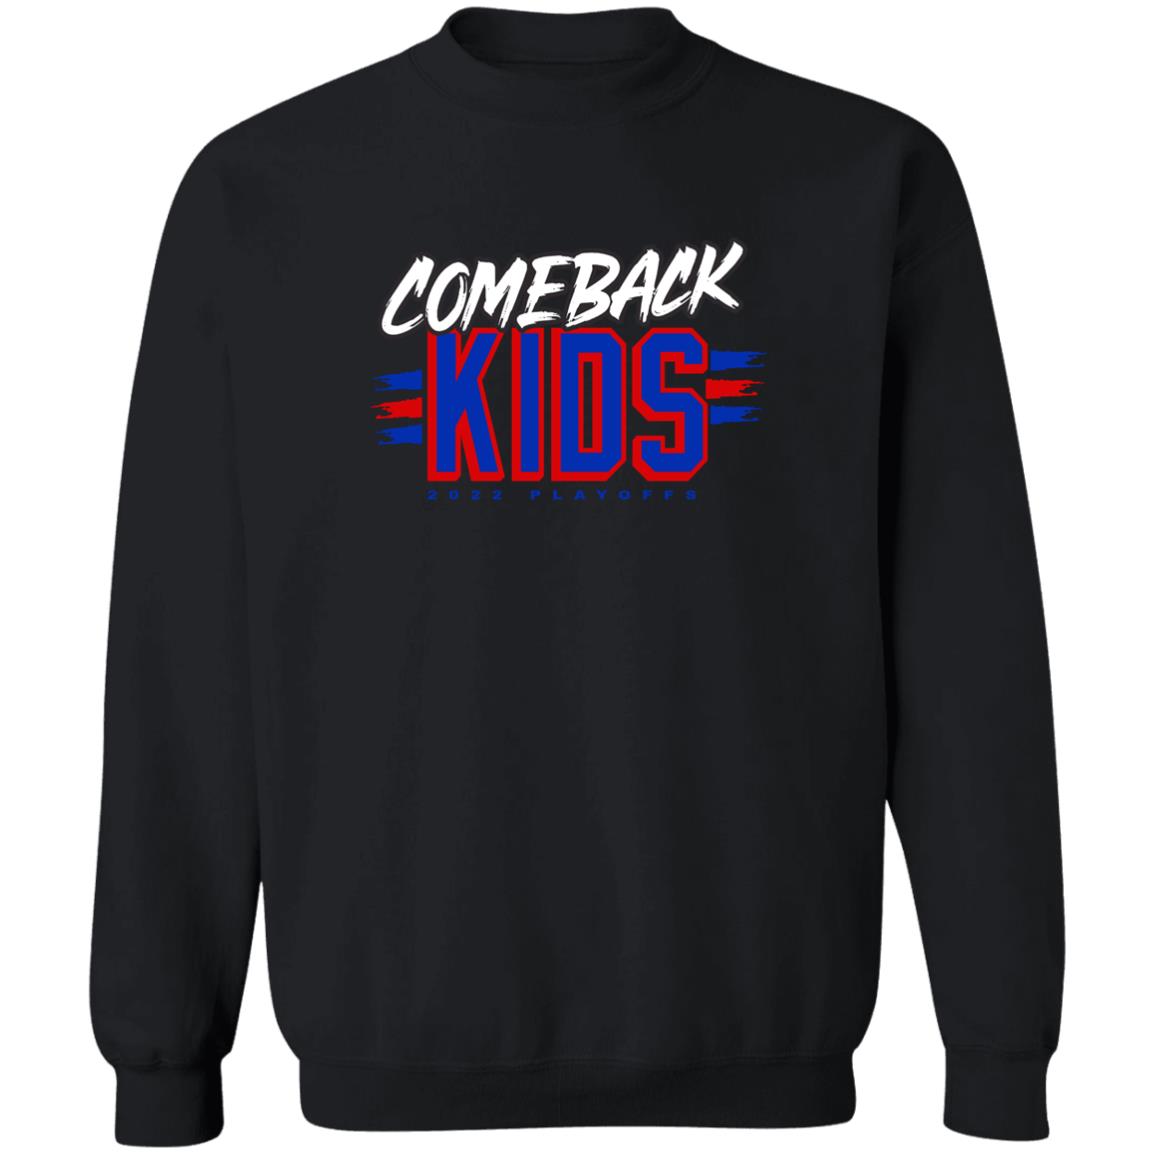 Comeback Kids 2022 Playoffs Shirt 2